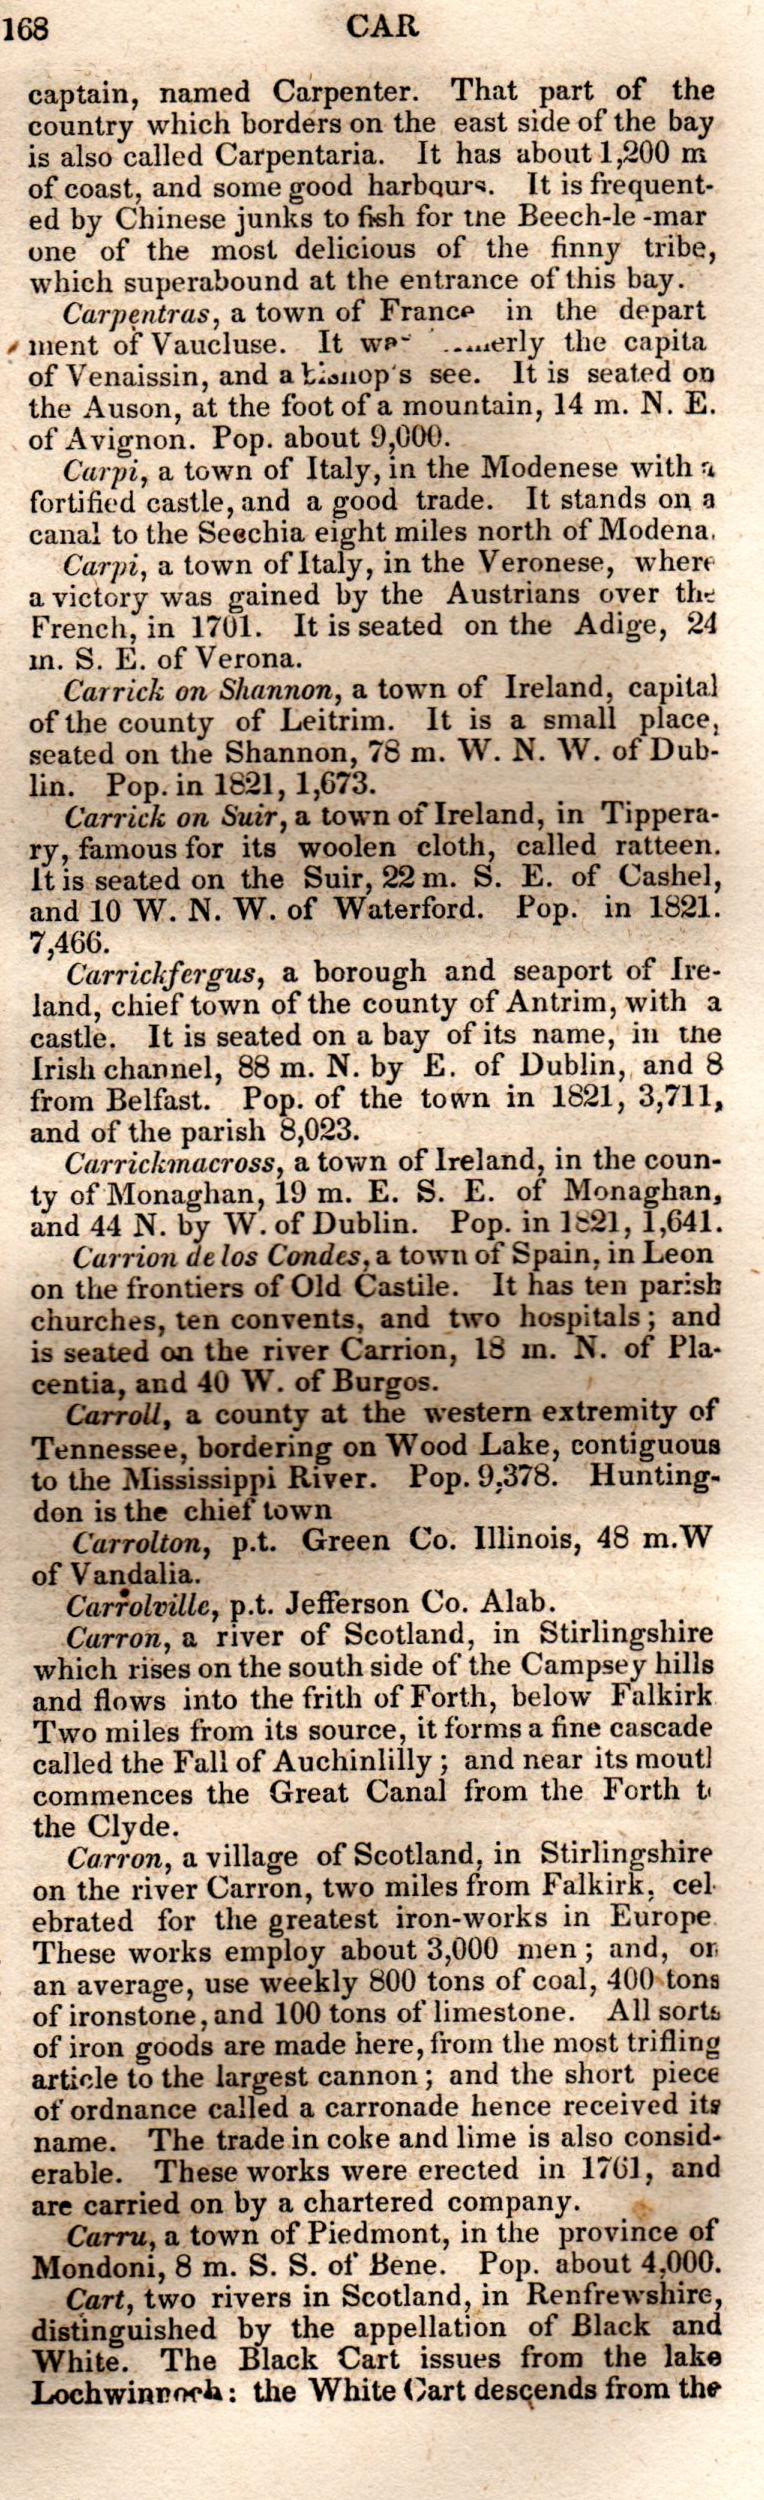 Brookes’ Universal Gazetteer (1850), Page 168 Right Column